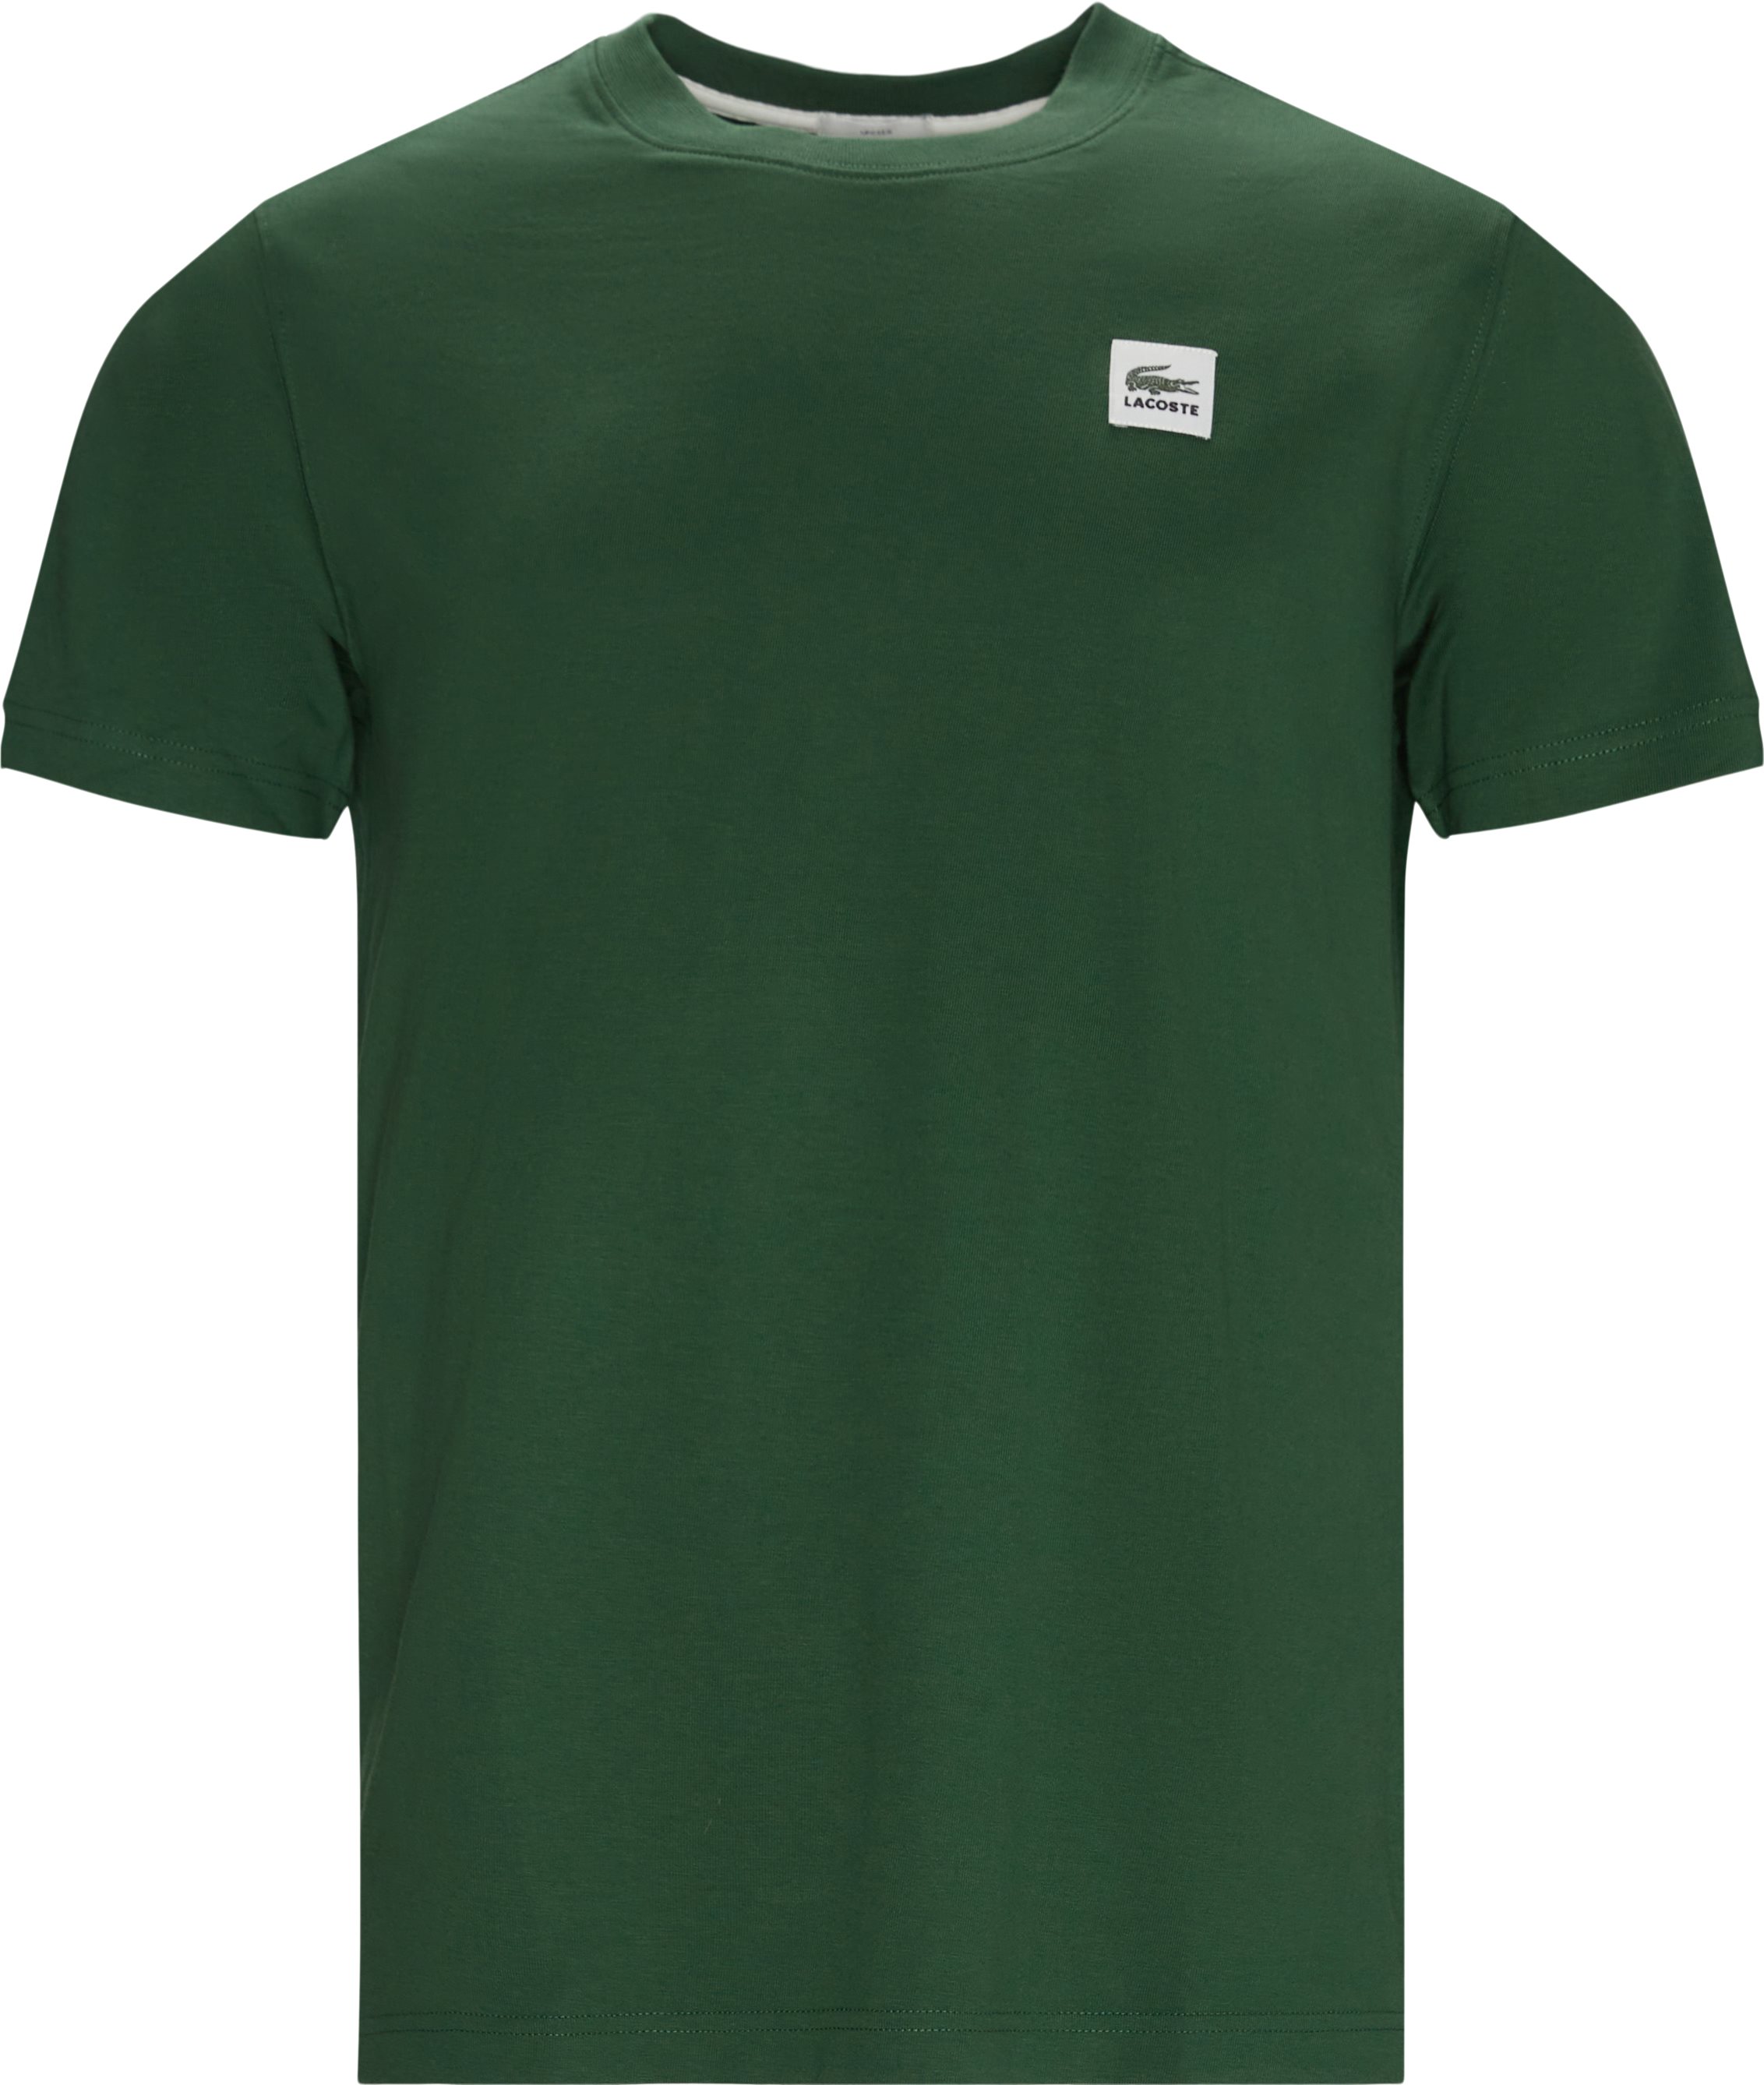 Logo Tee - T-shirts - Regular fit - Green